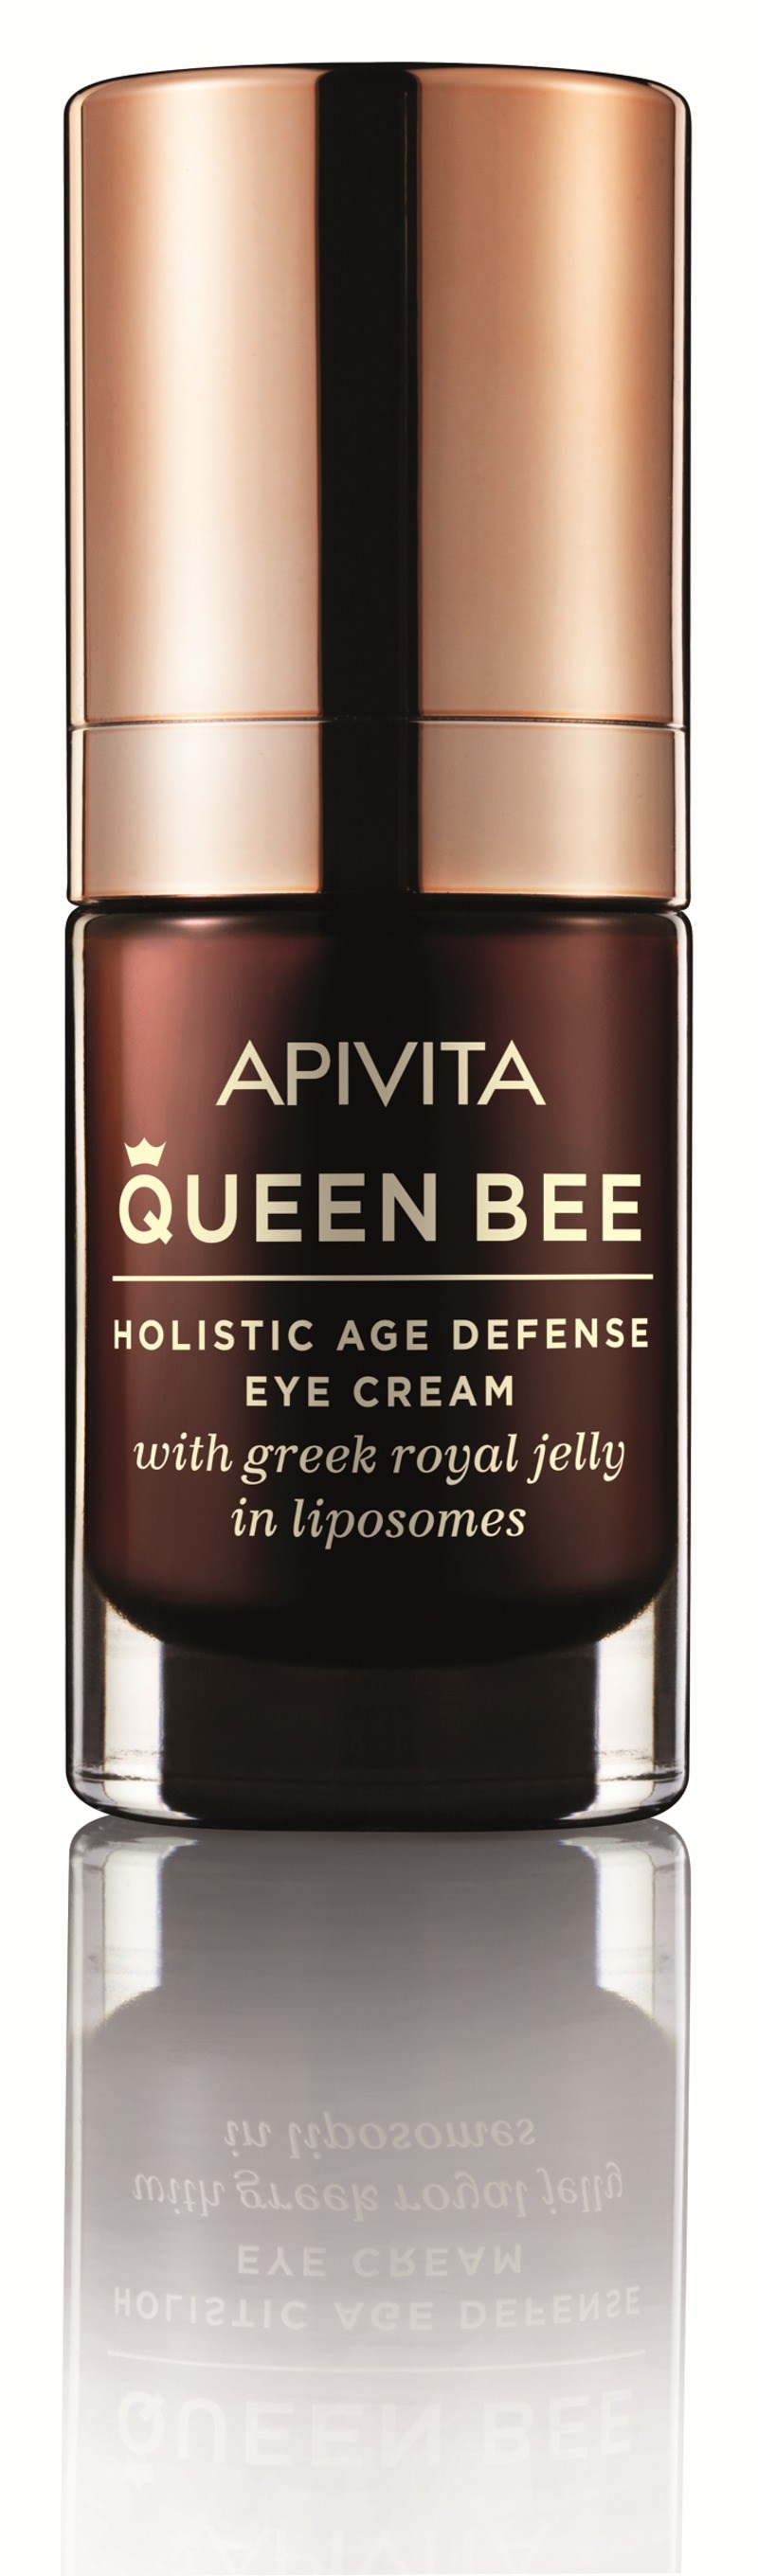 Apivita Queen Bee: H σειρά προϊόντων που σταματάει το χρόνο